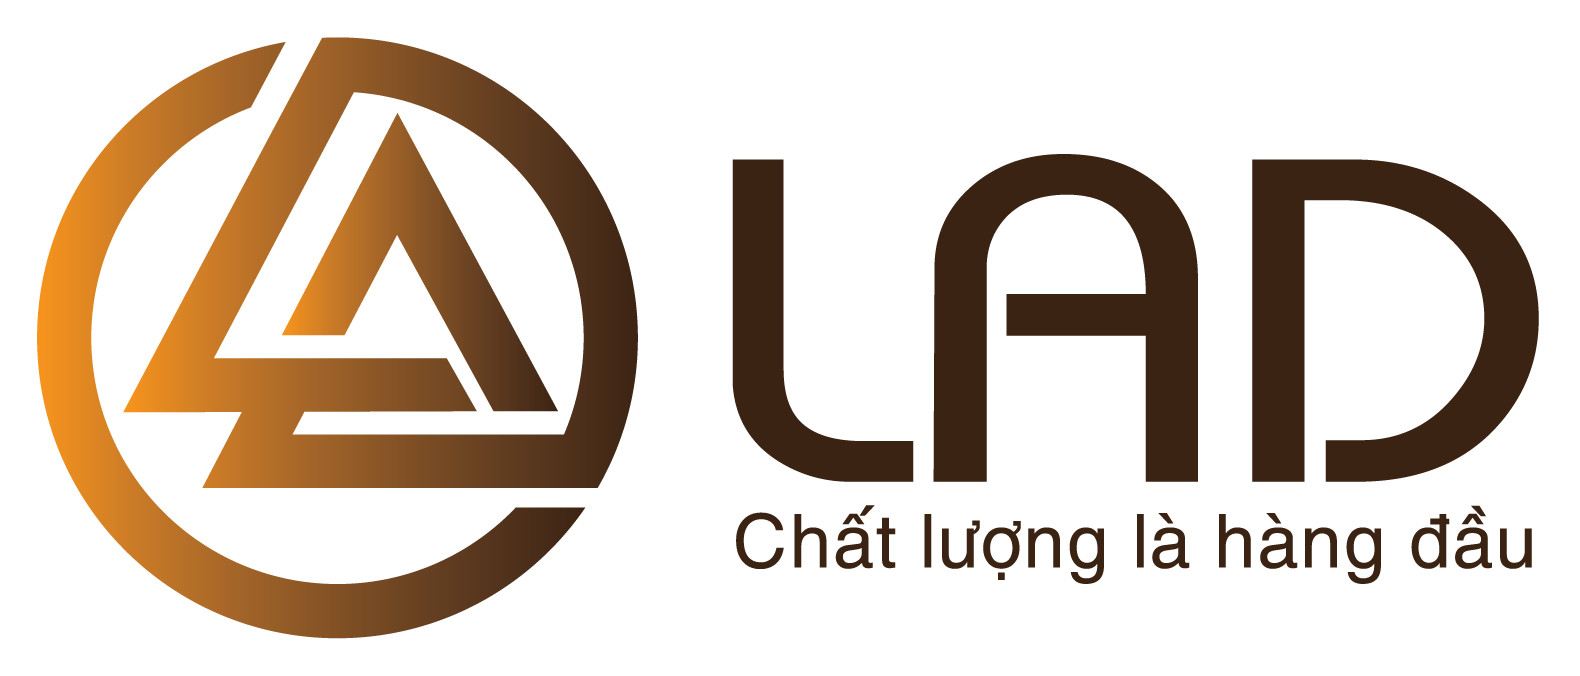 logo_lad